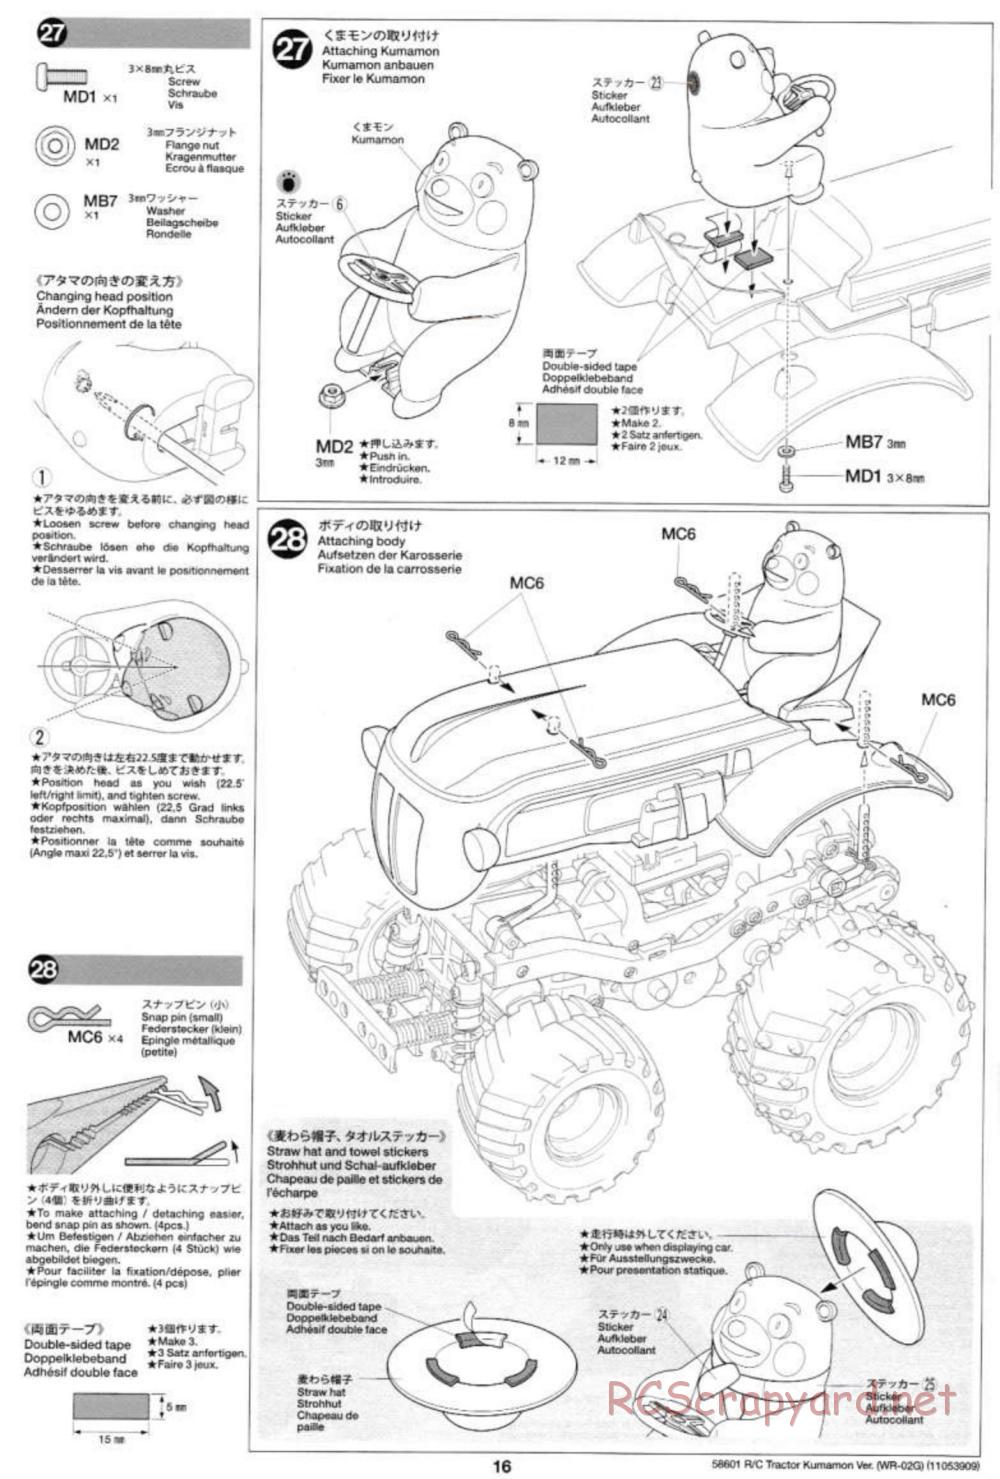 Tamiya - Tractor Kumamon Version Chassis - Manual - Page 16